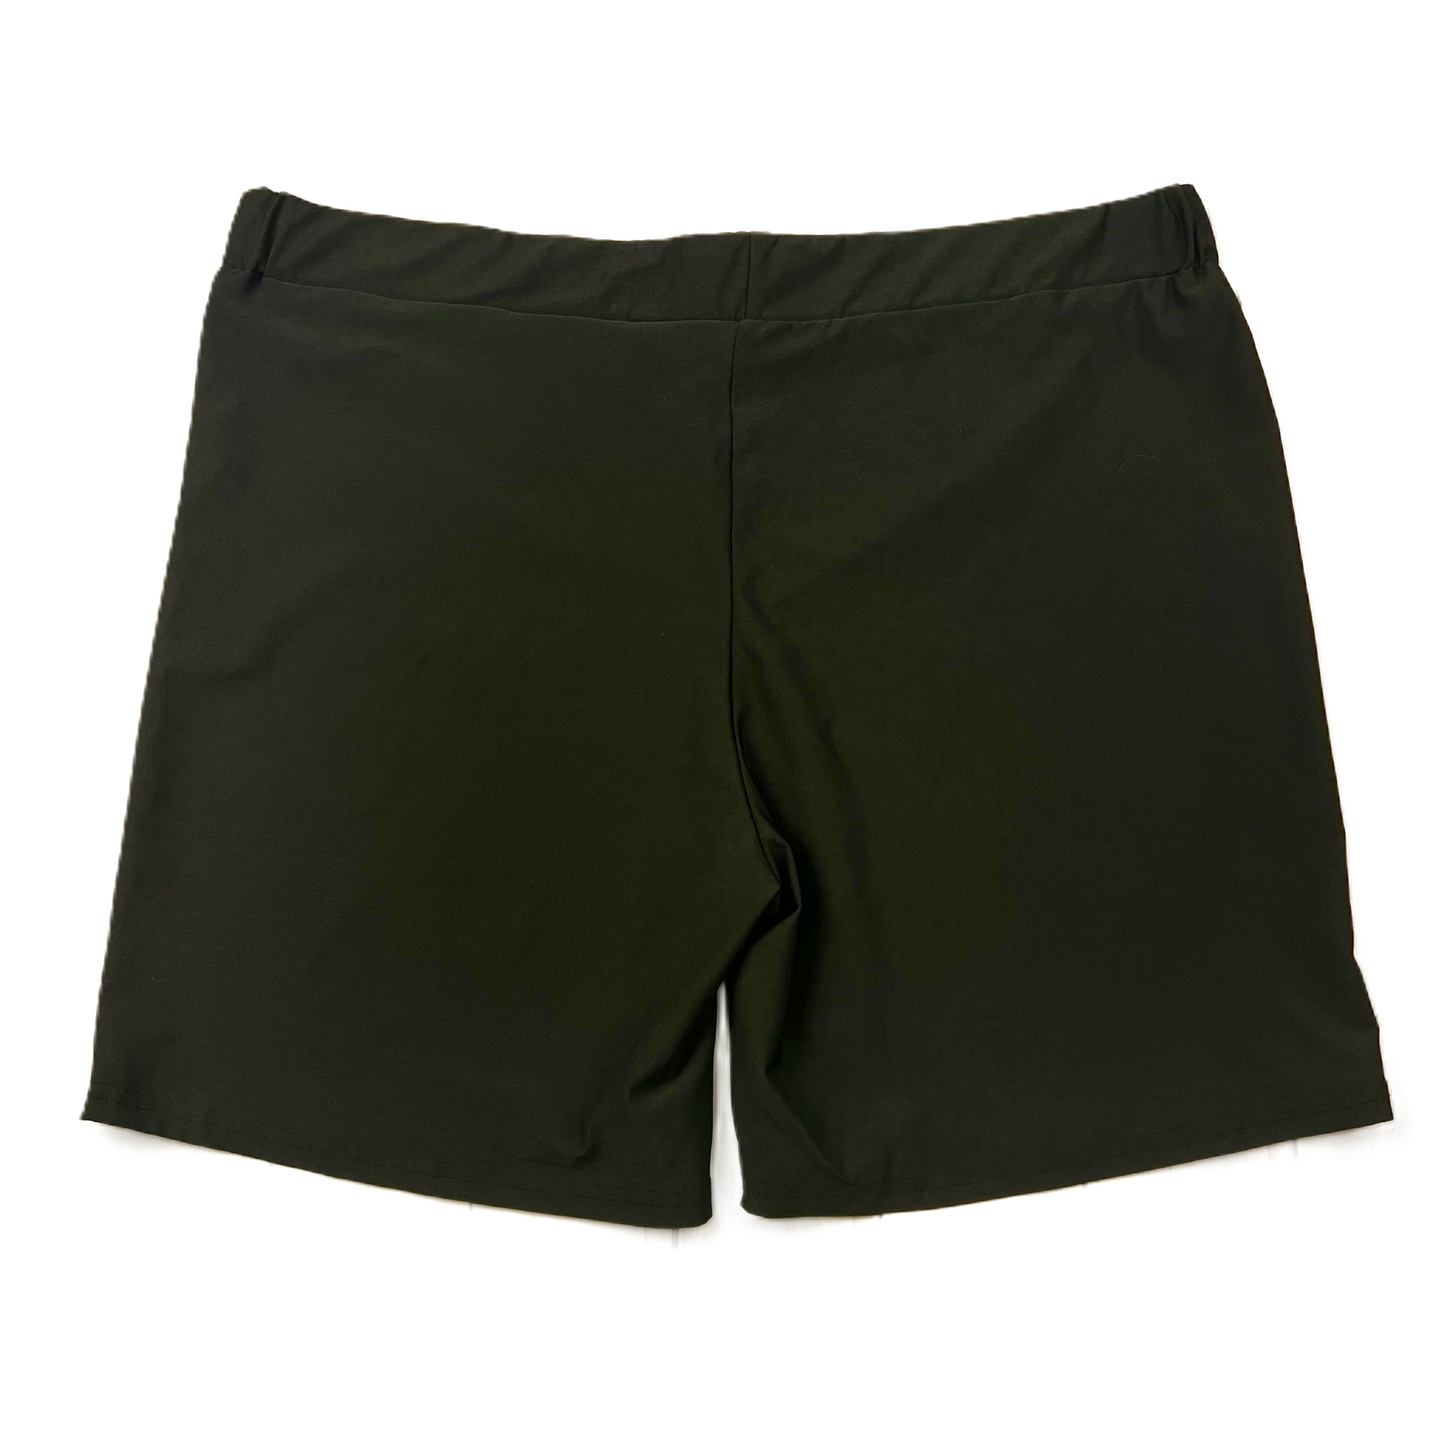 Black Shorts, Size: 4x